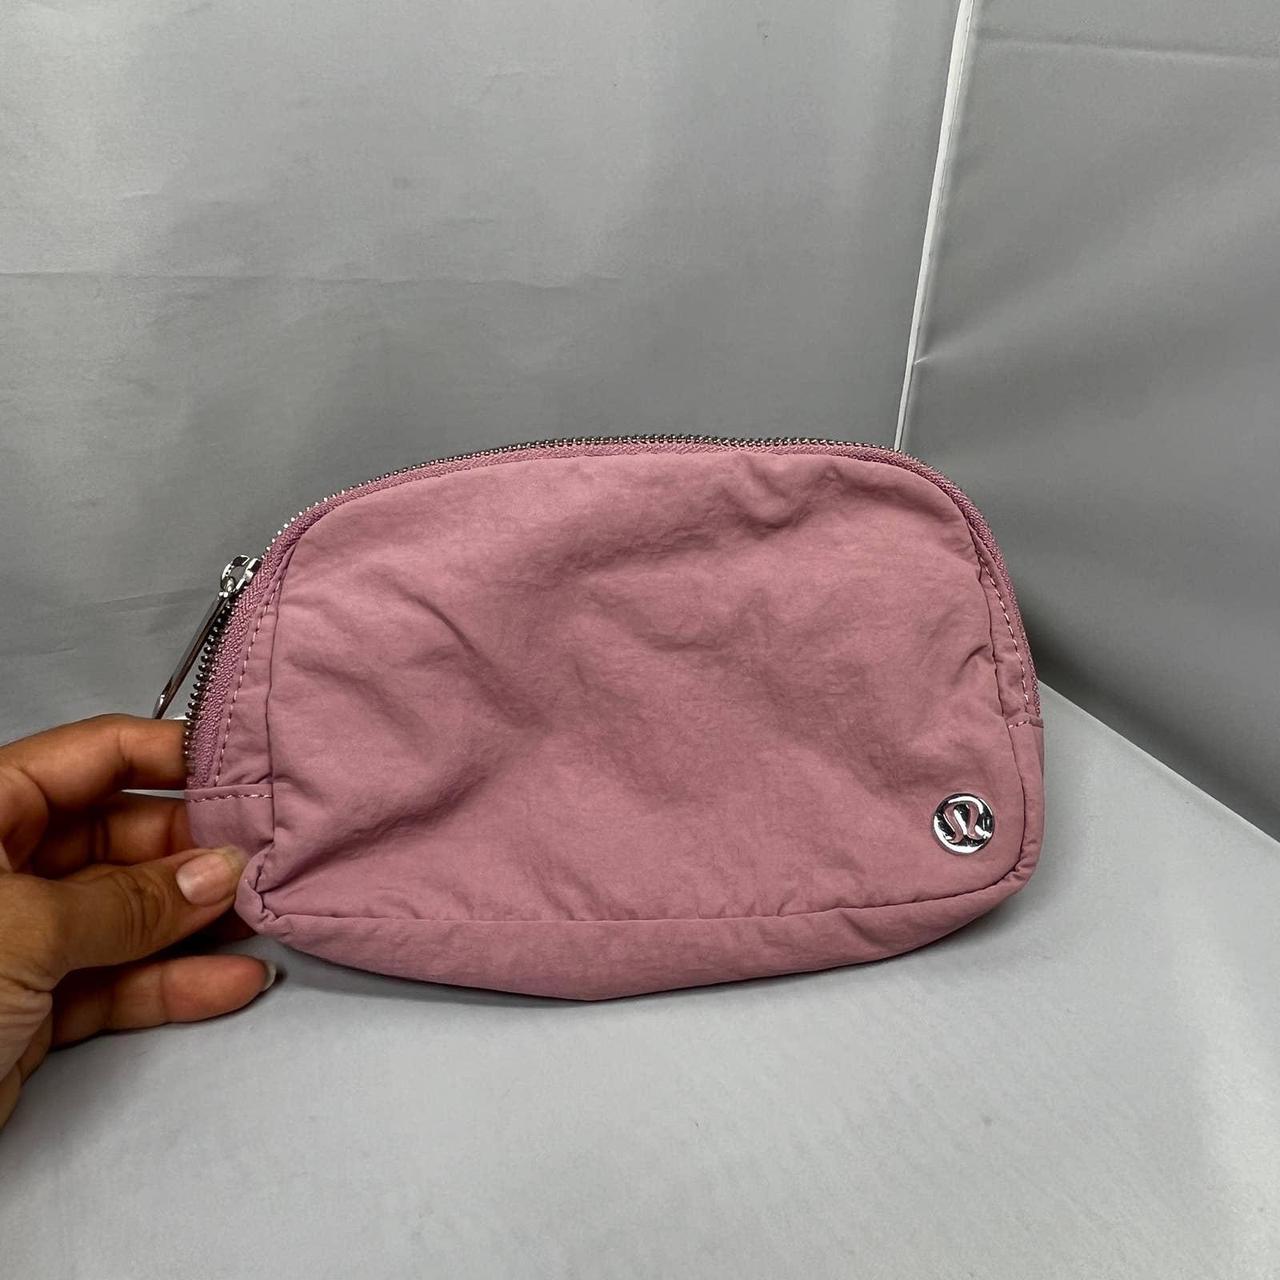 Lululemon Everywhere Belt Bag in Pink Taupe - Depop